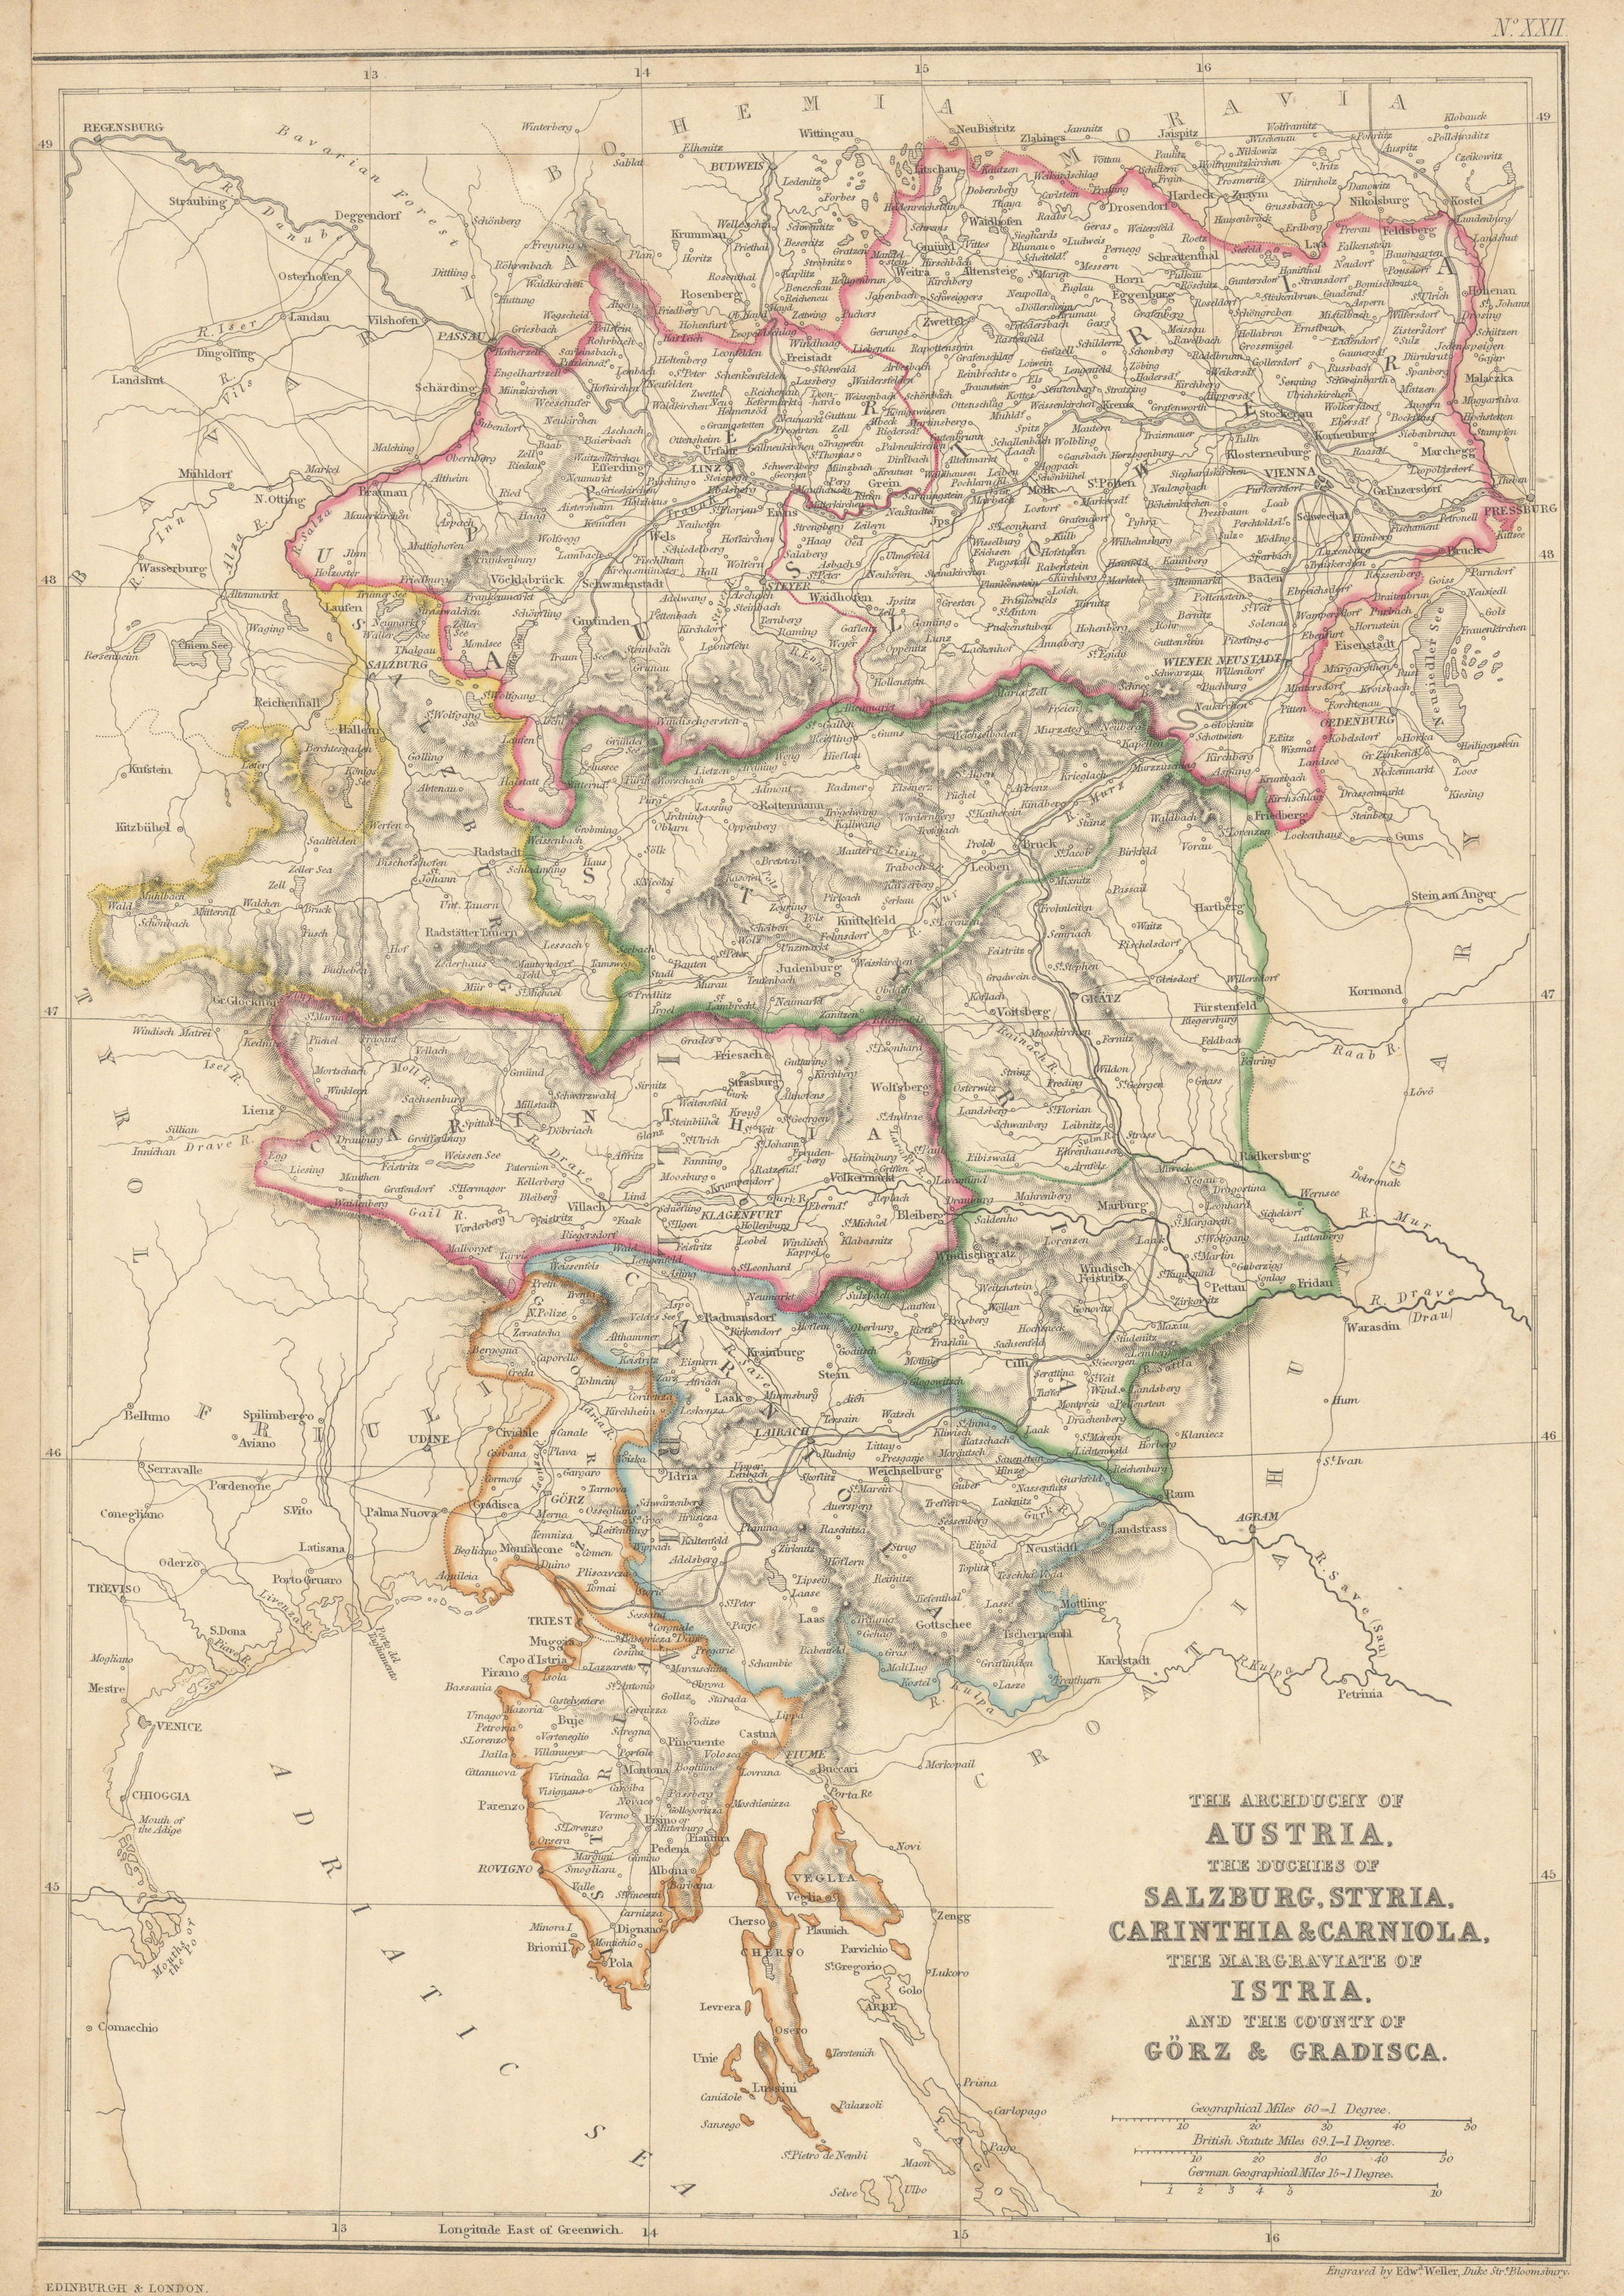 Associate Product Archduchy of Austria. Salzburg, Styria… Slovenia Istria. WELLER 1860 old map